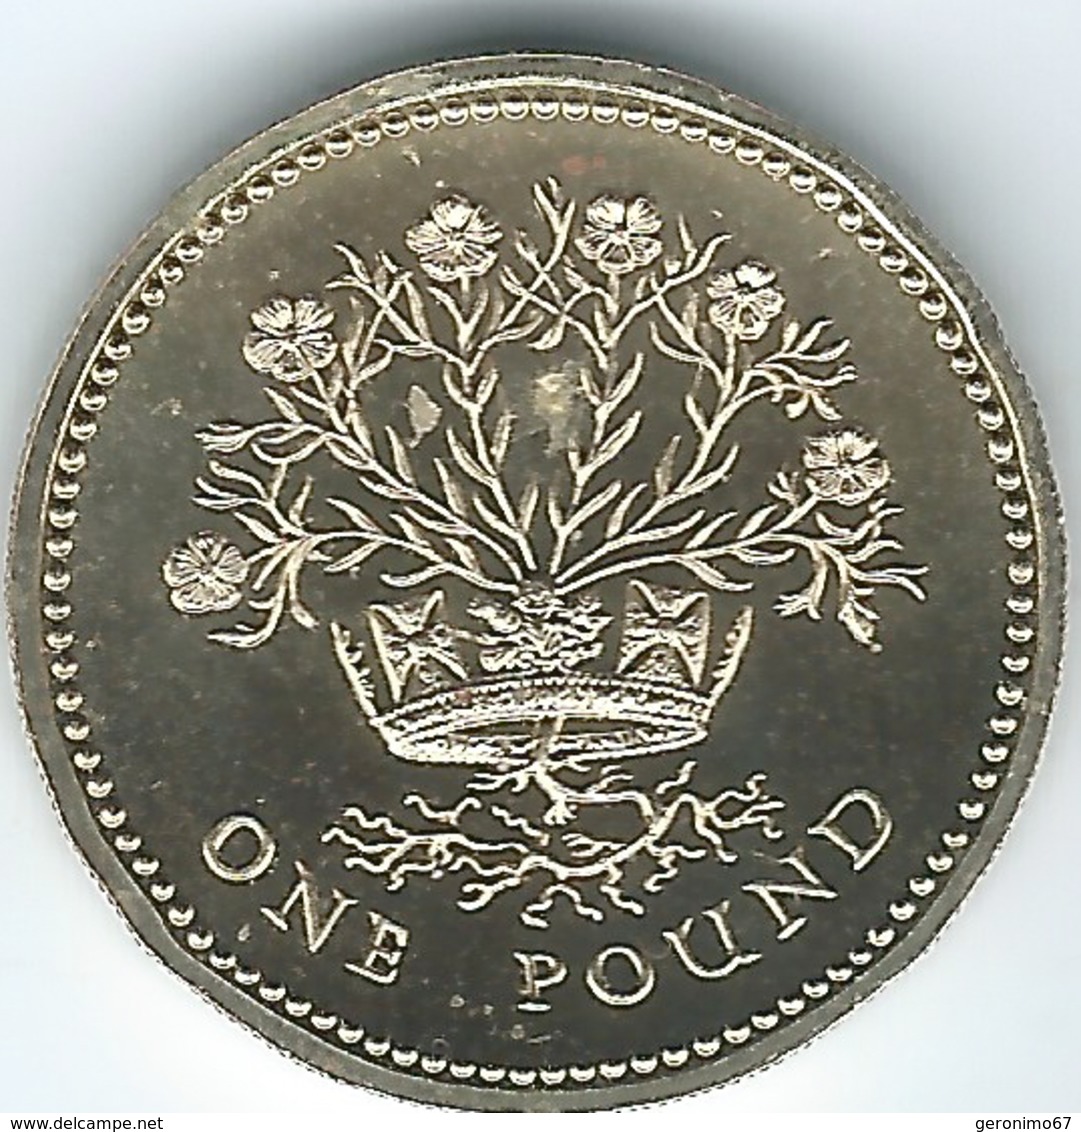 Great Britain / United Kingdom - 1986 - 1 Pound - Elizabeth II - Northern Ireland Flax - KM946 - UNC - 1 Pound